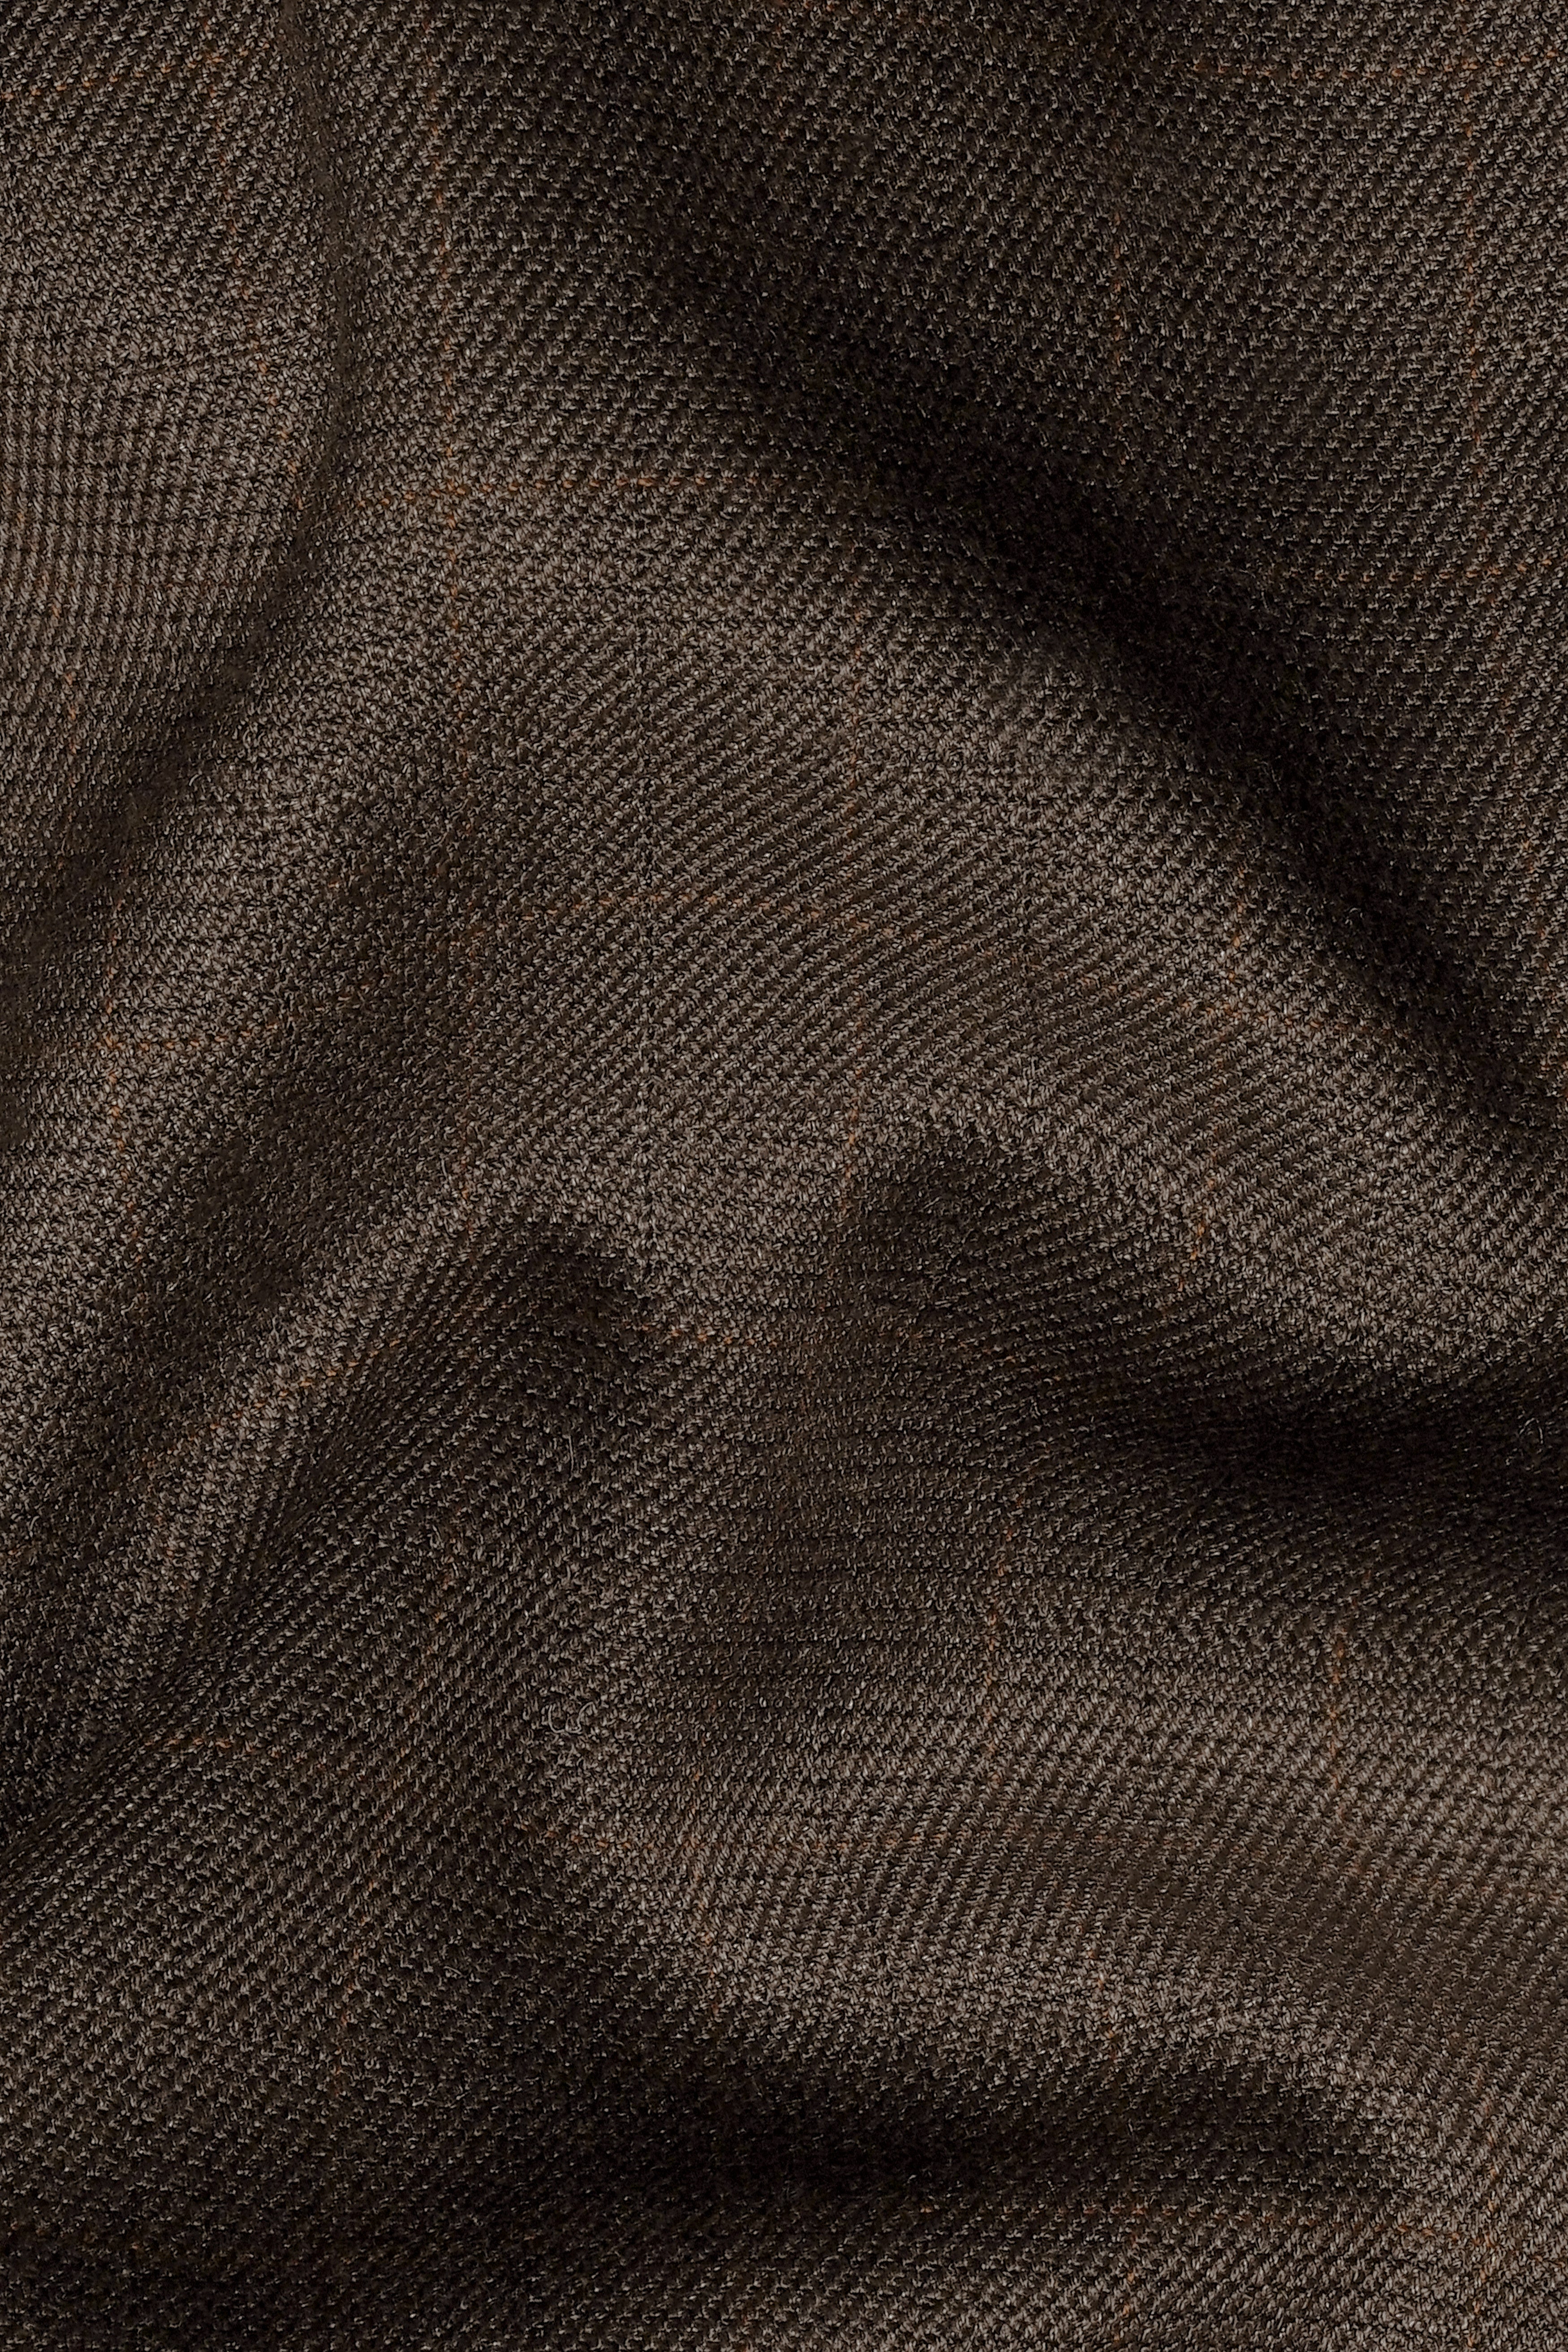 Matterhorn Brown Subtle Checkered Wool Rich Stretchable Waistband Pant